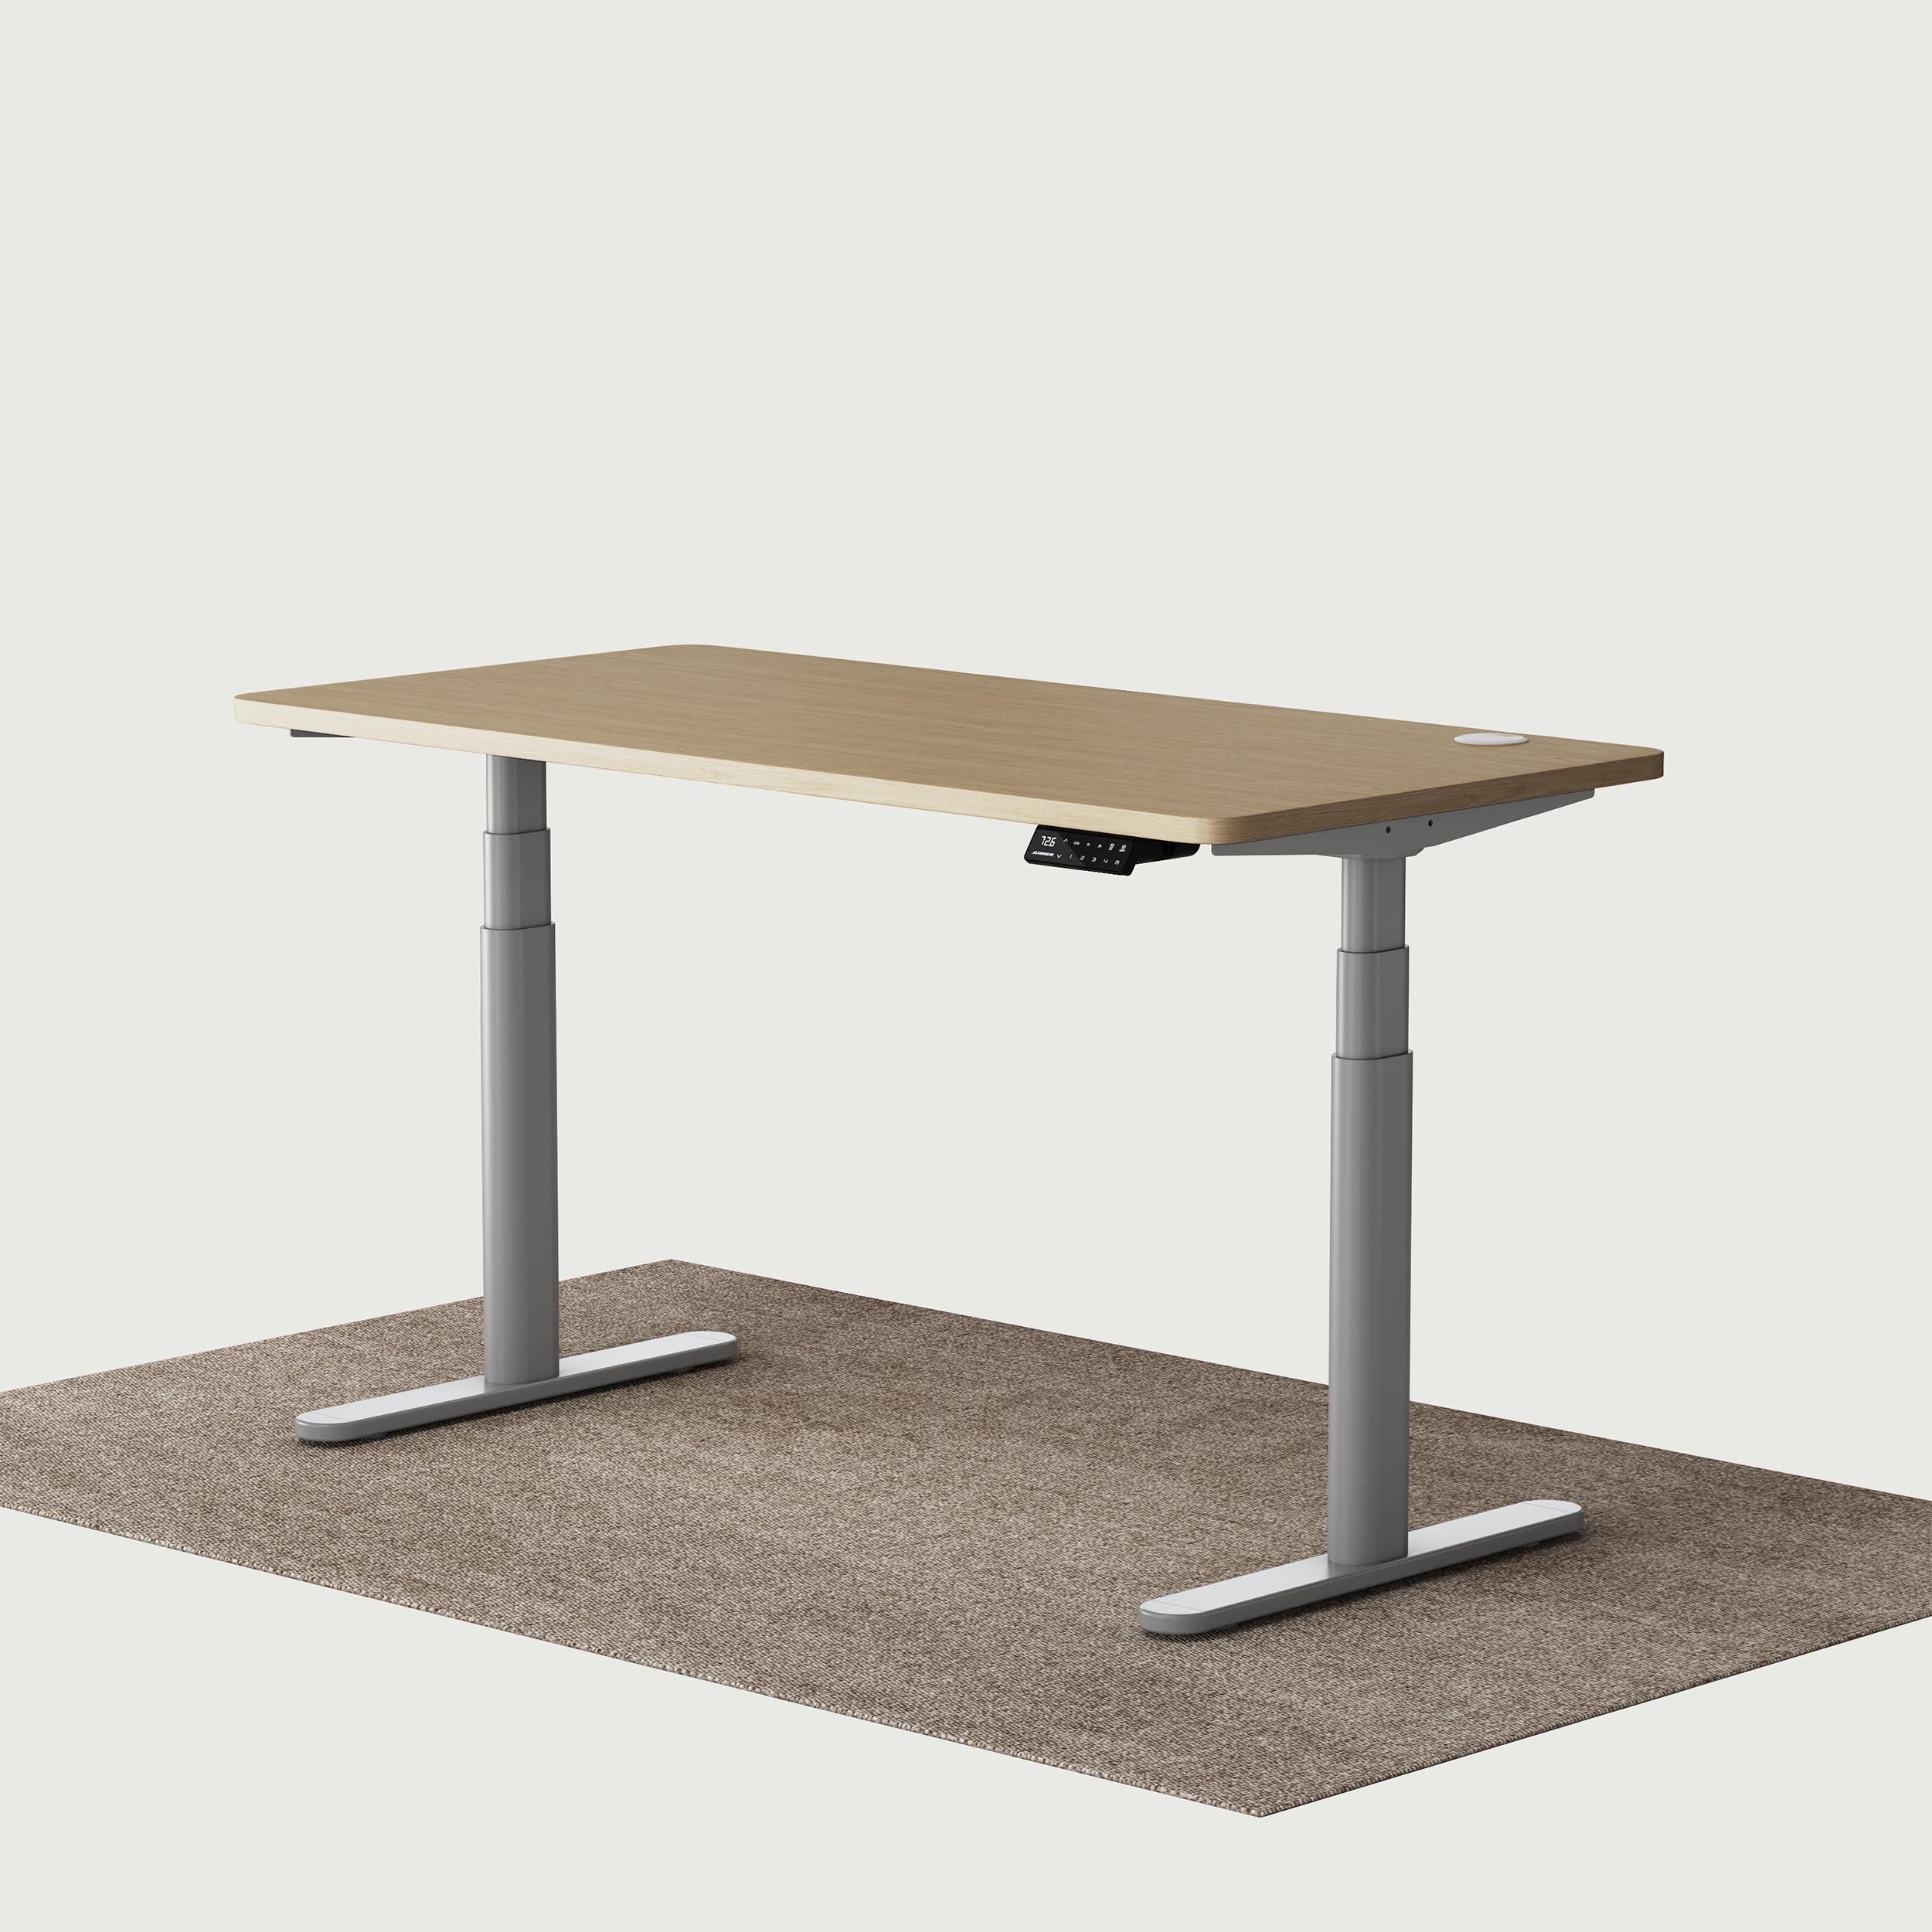 TH2 Pro Plus grey oval electric standing desk frame with oak 140x70 cm desktop